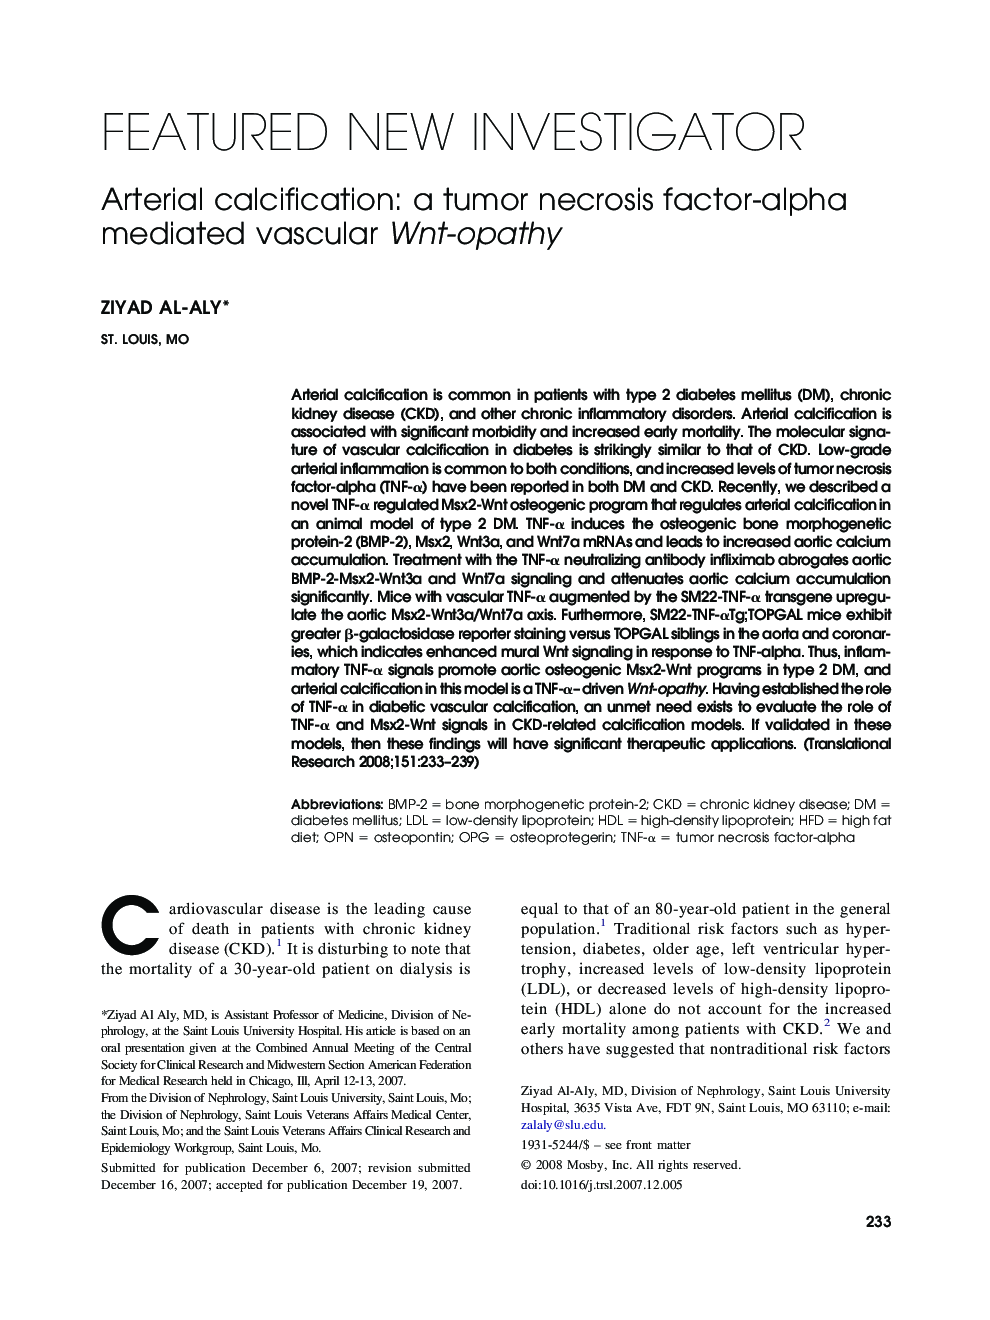 Arterial calcification: a tumor necrosis factor-alpha mediated vascular Wnt-opathy